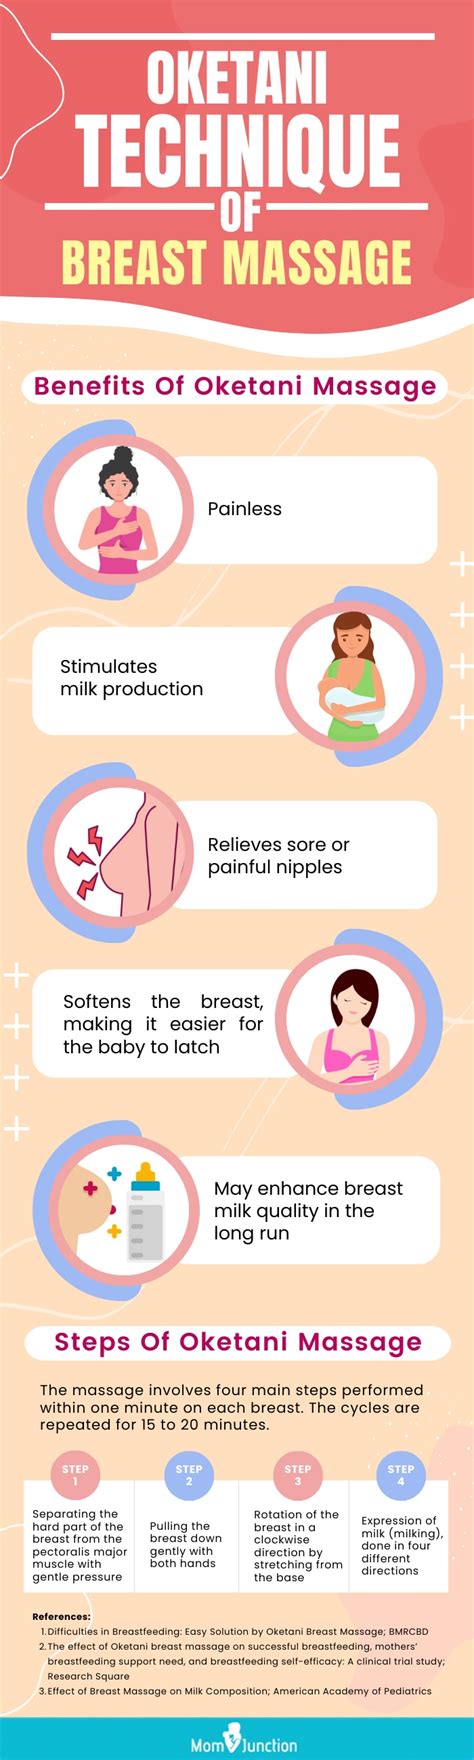 5 Benefits Of Lactation Massage For Breastfeeding Moms 188bet体育平台